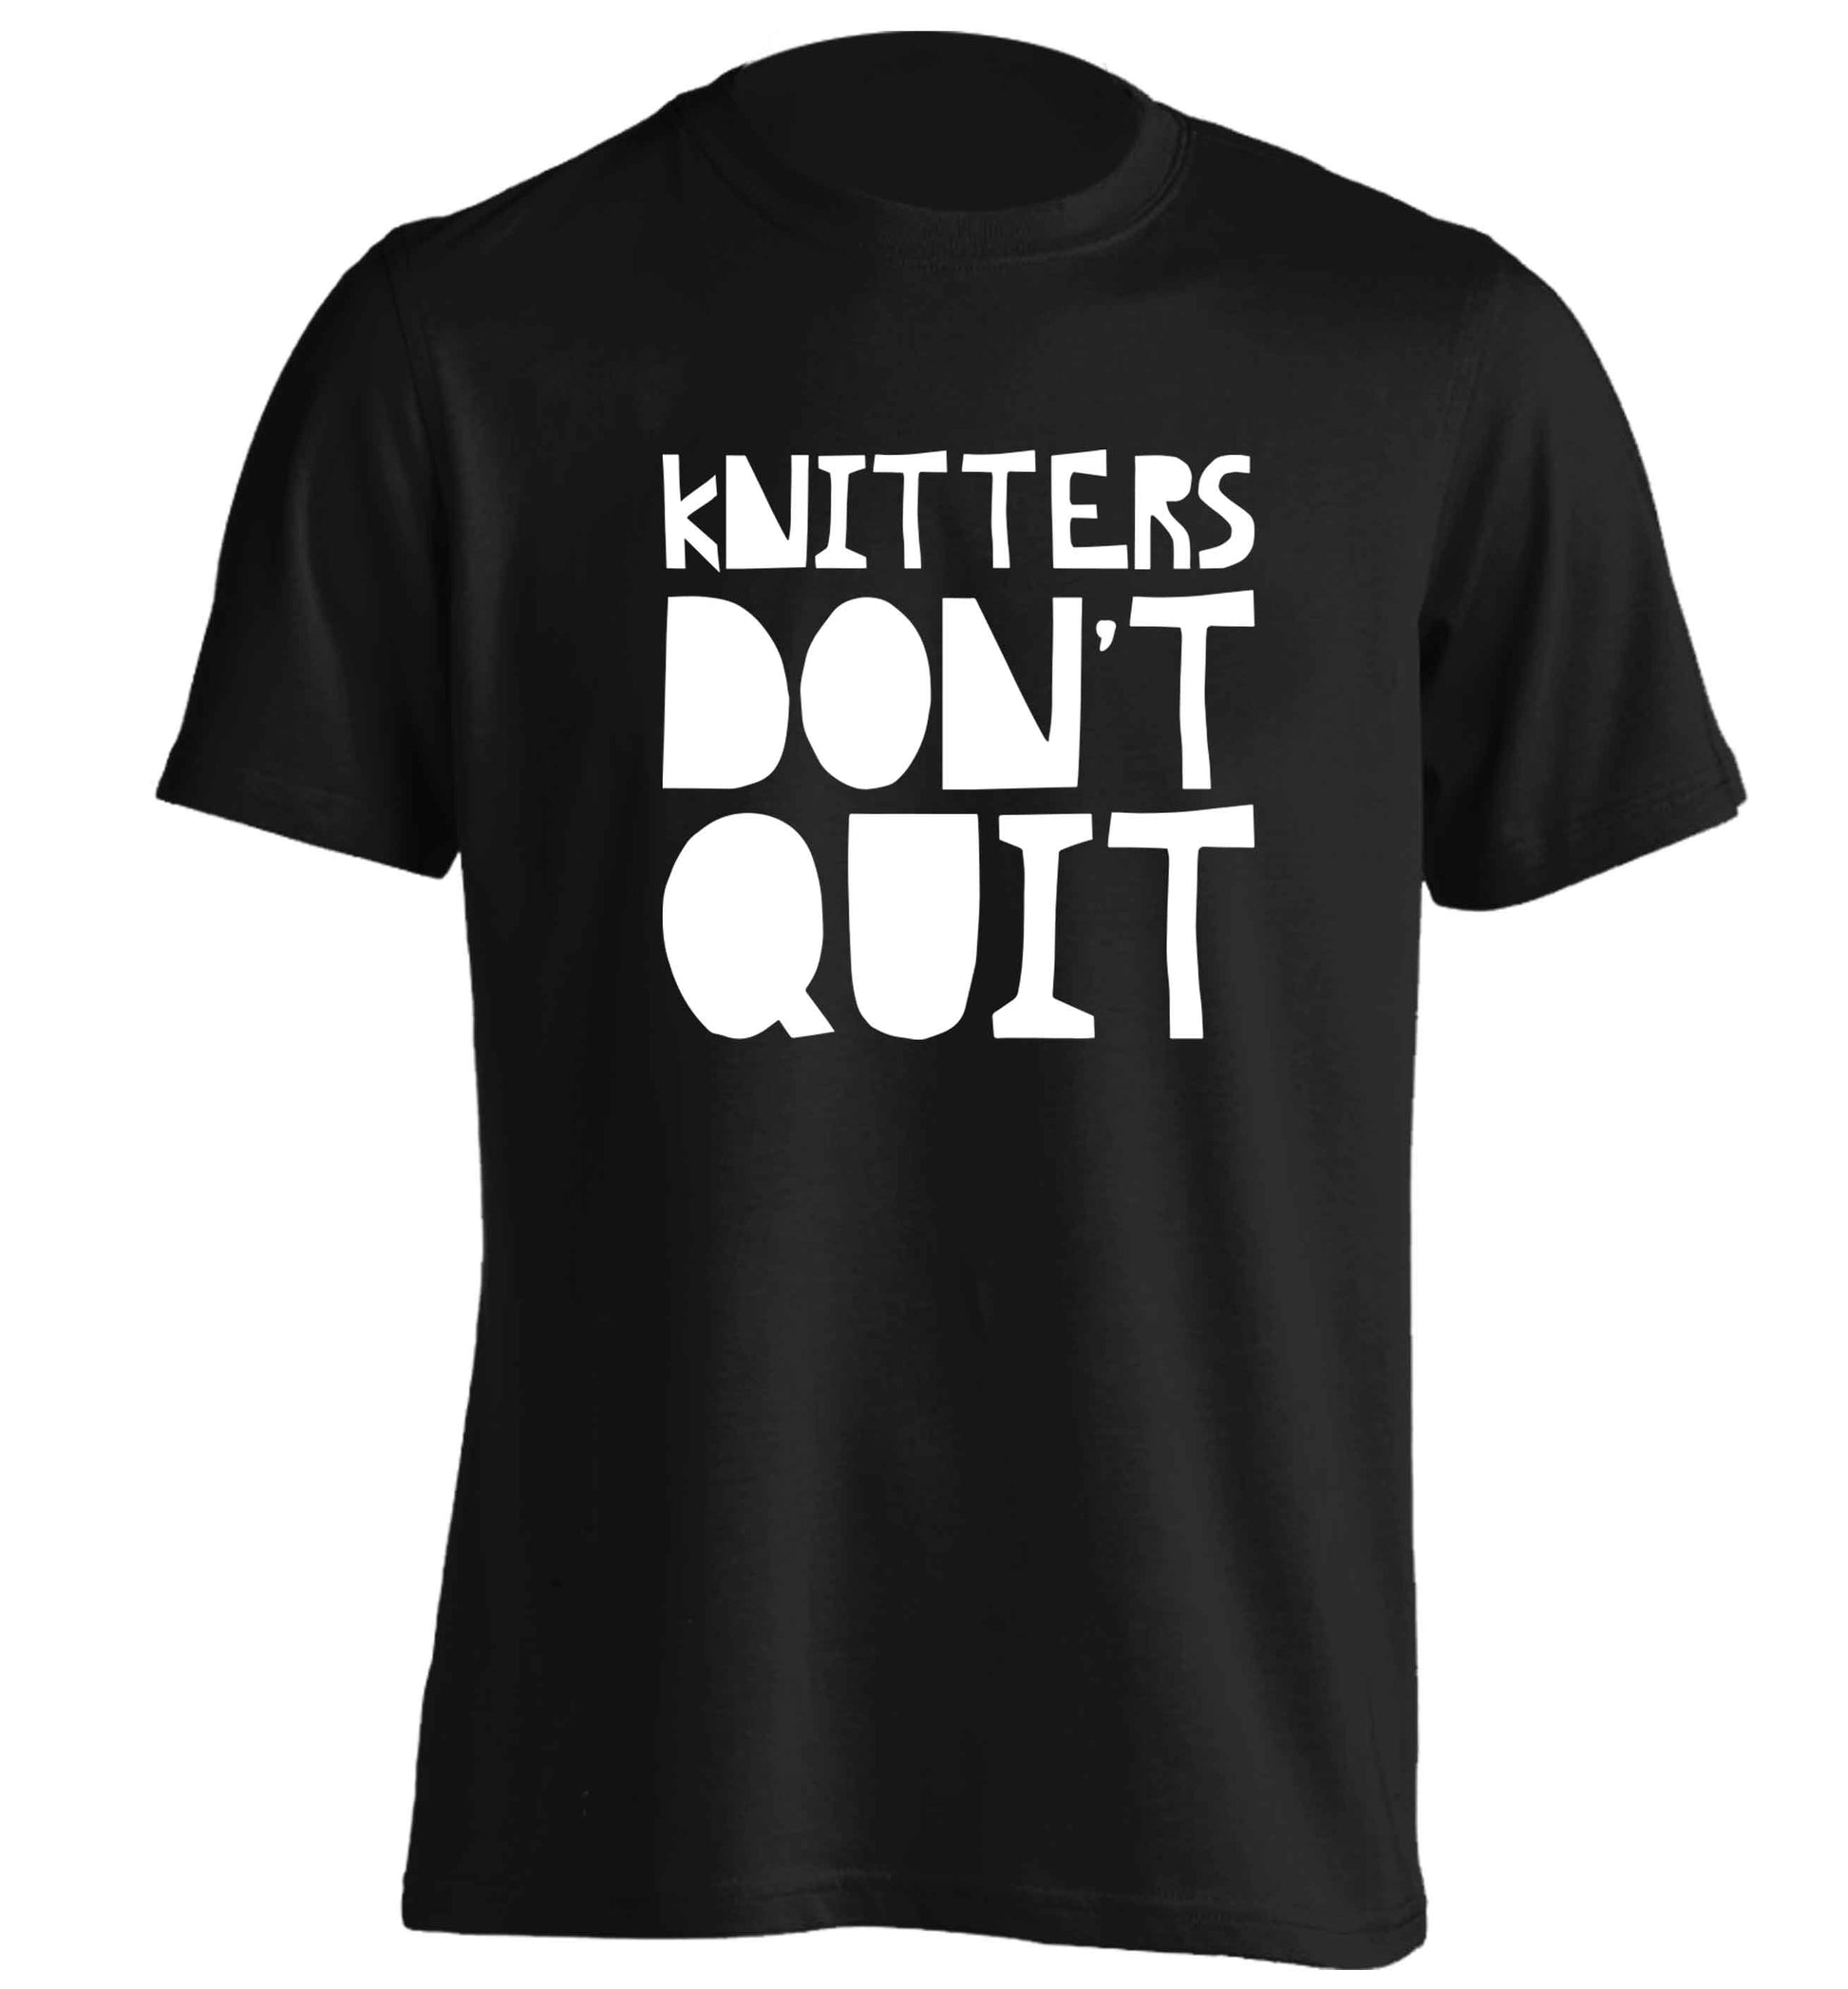 Knitters don't quit adults unisex black Tshirt 2XL